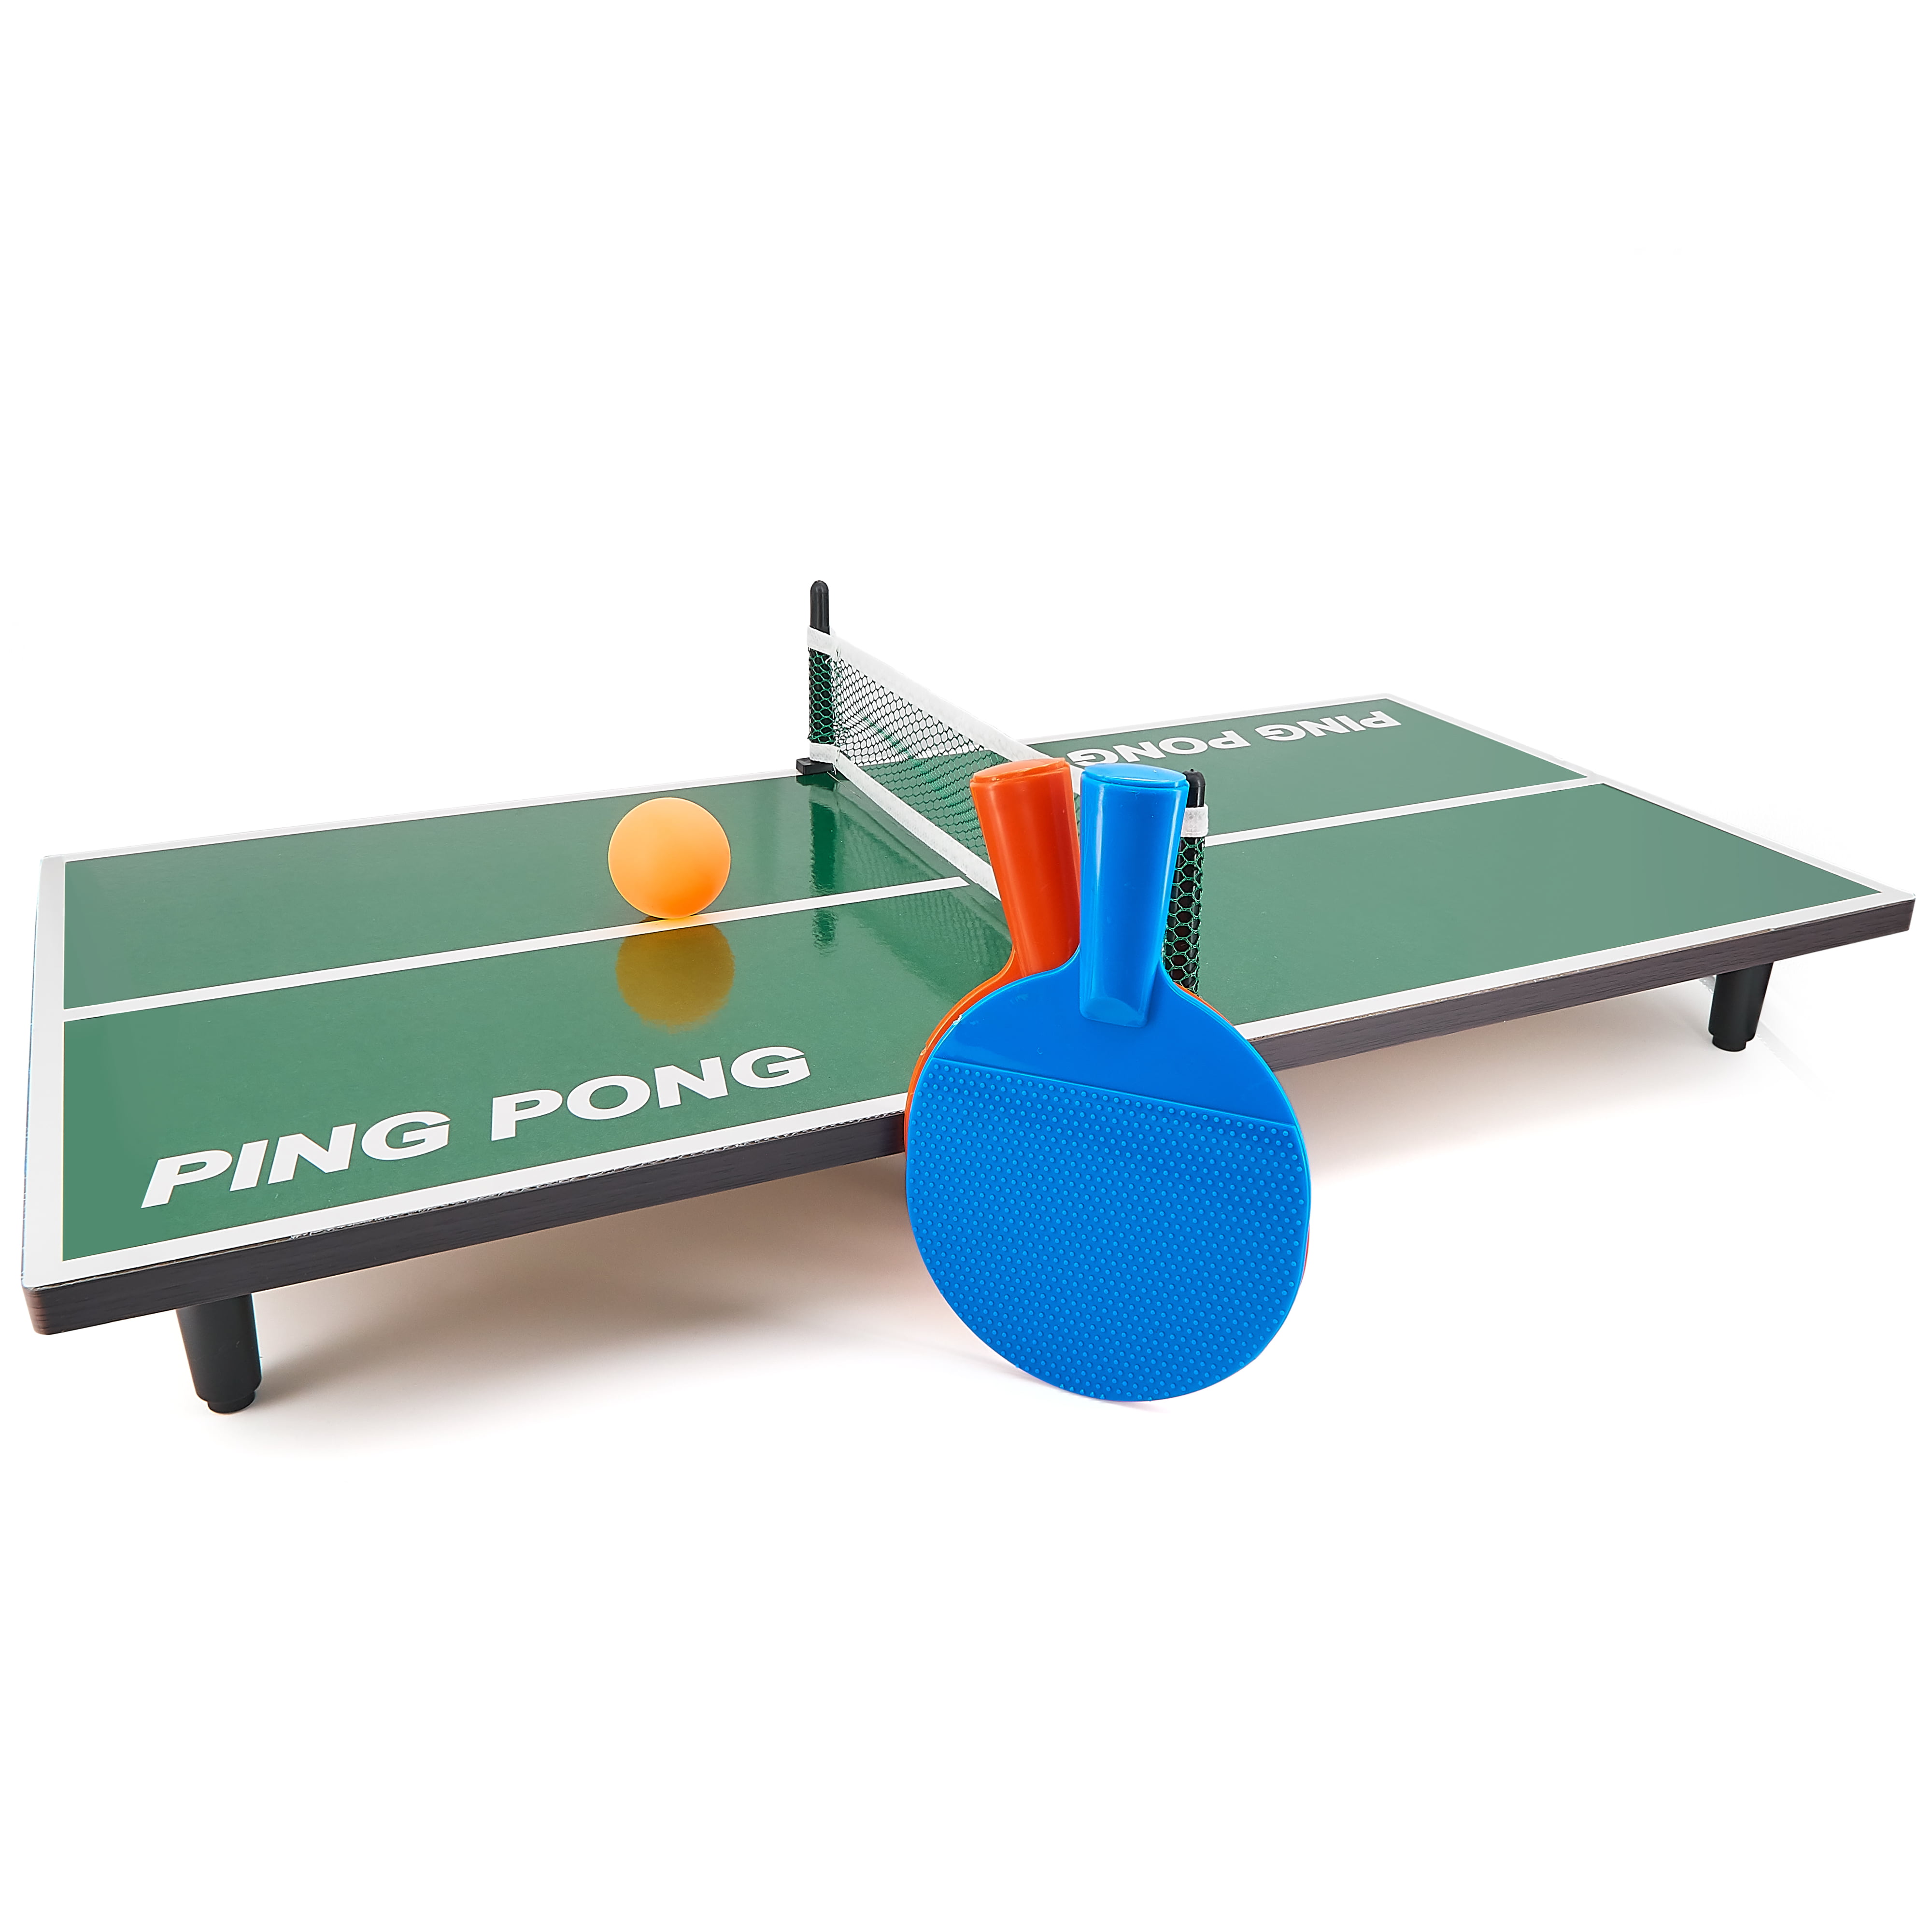 1 Ping Pong Ball Mini Table Tennis Set Fun Games Portable Net With 2 Rackets 